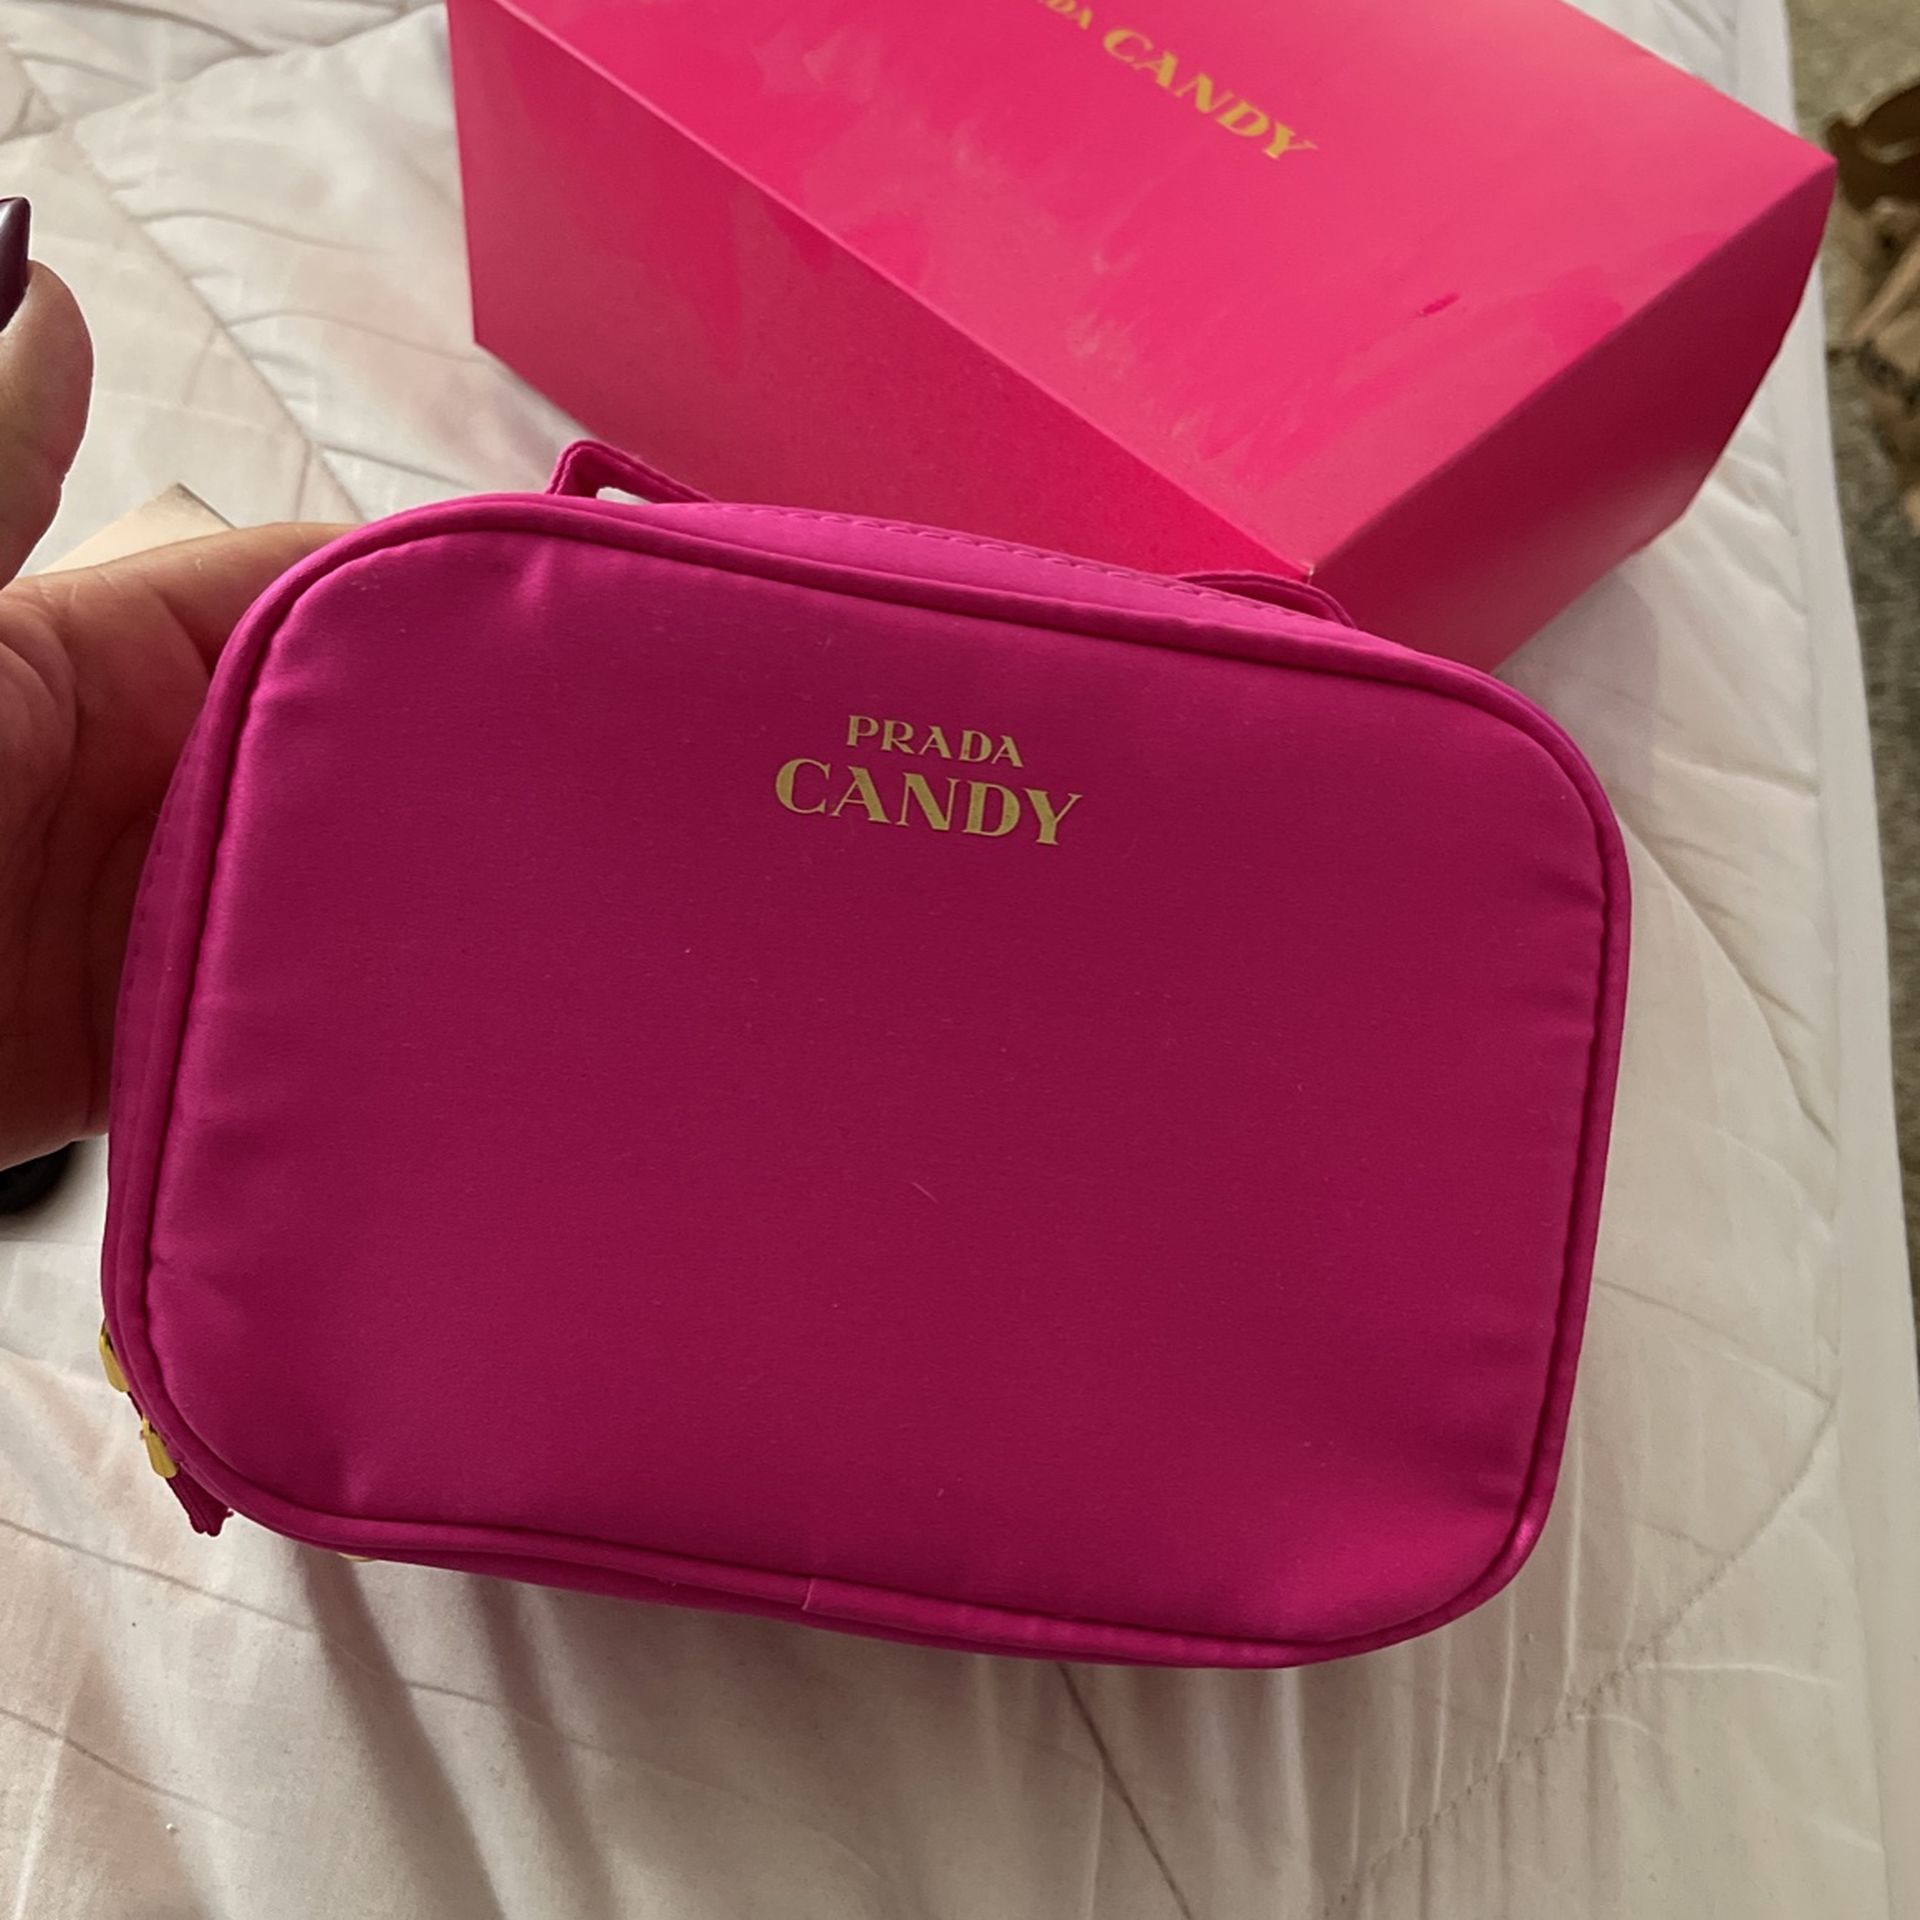 Prada Candy Make-up Bag 